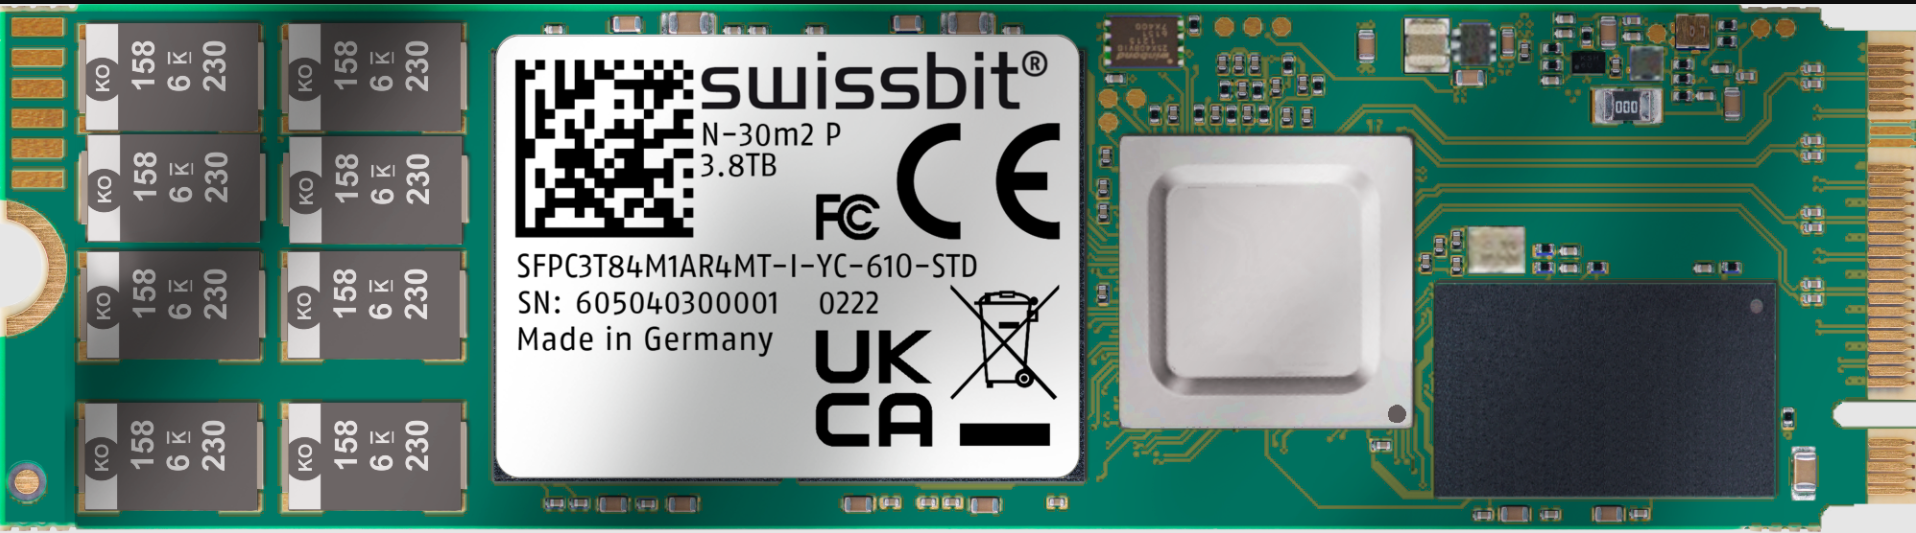 Swissbit 推出高性能 PCIe-SSD N-30m2